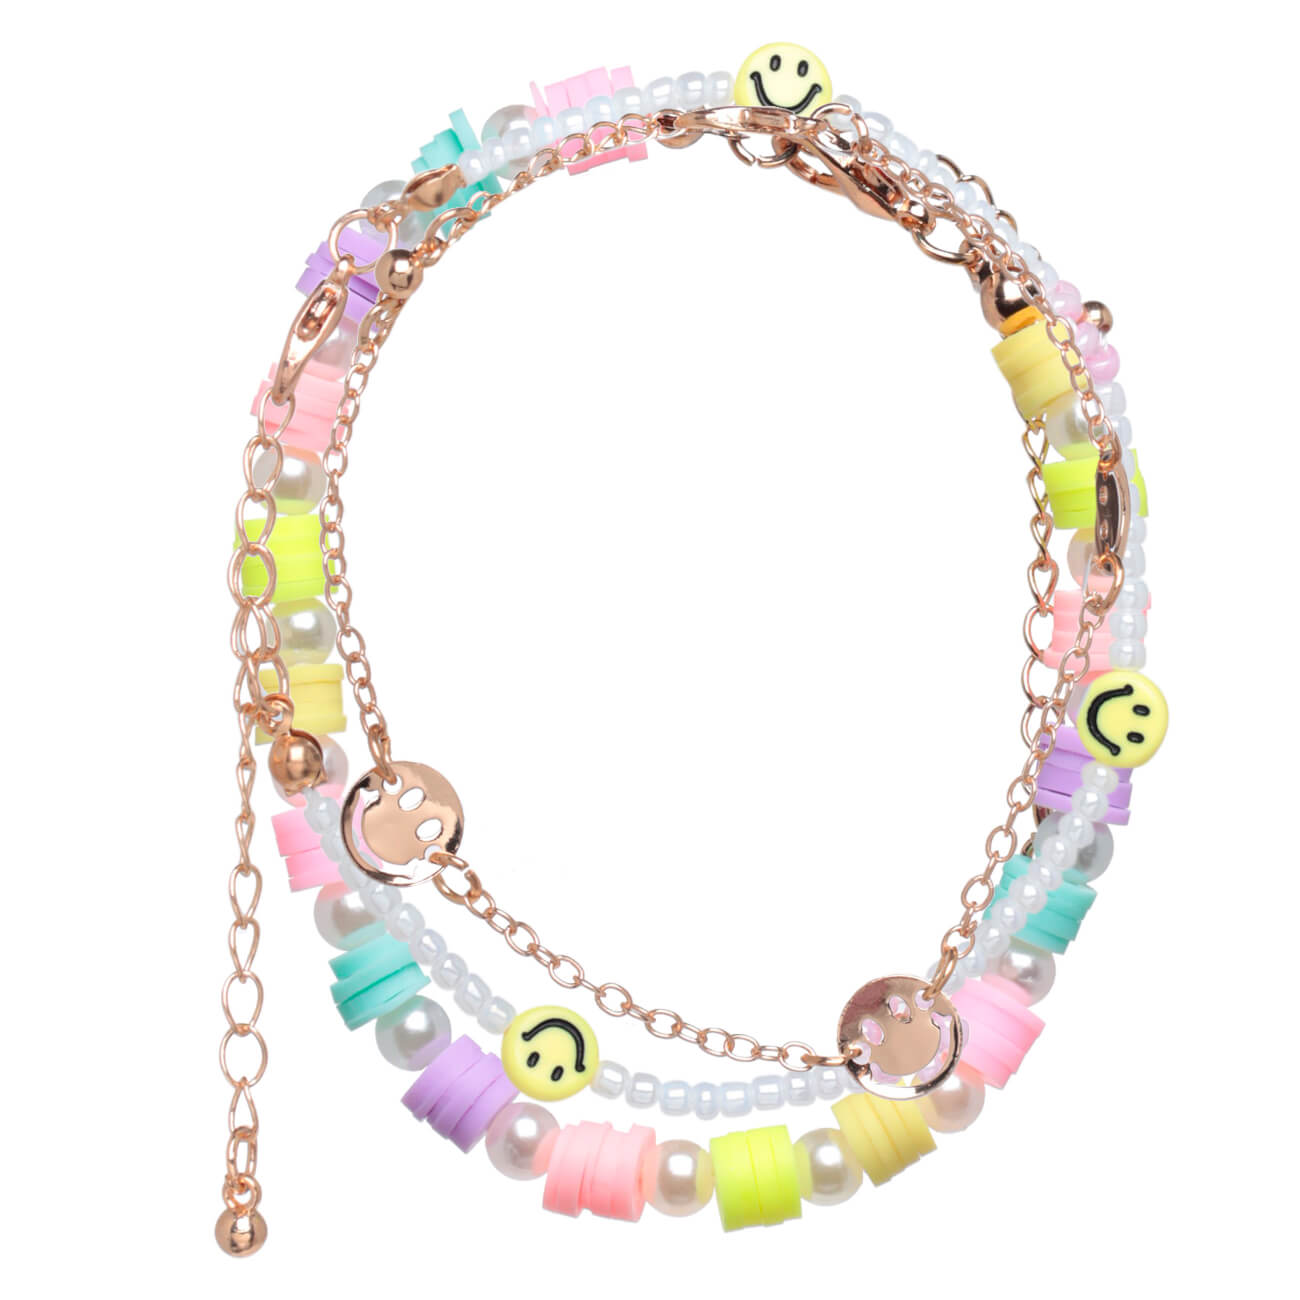 Bracelet, 23 cm, 3 pieces, for children, metal / plastic, colored, Smileys and beads, Pearl color изображение № 1